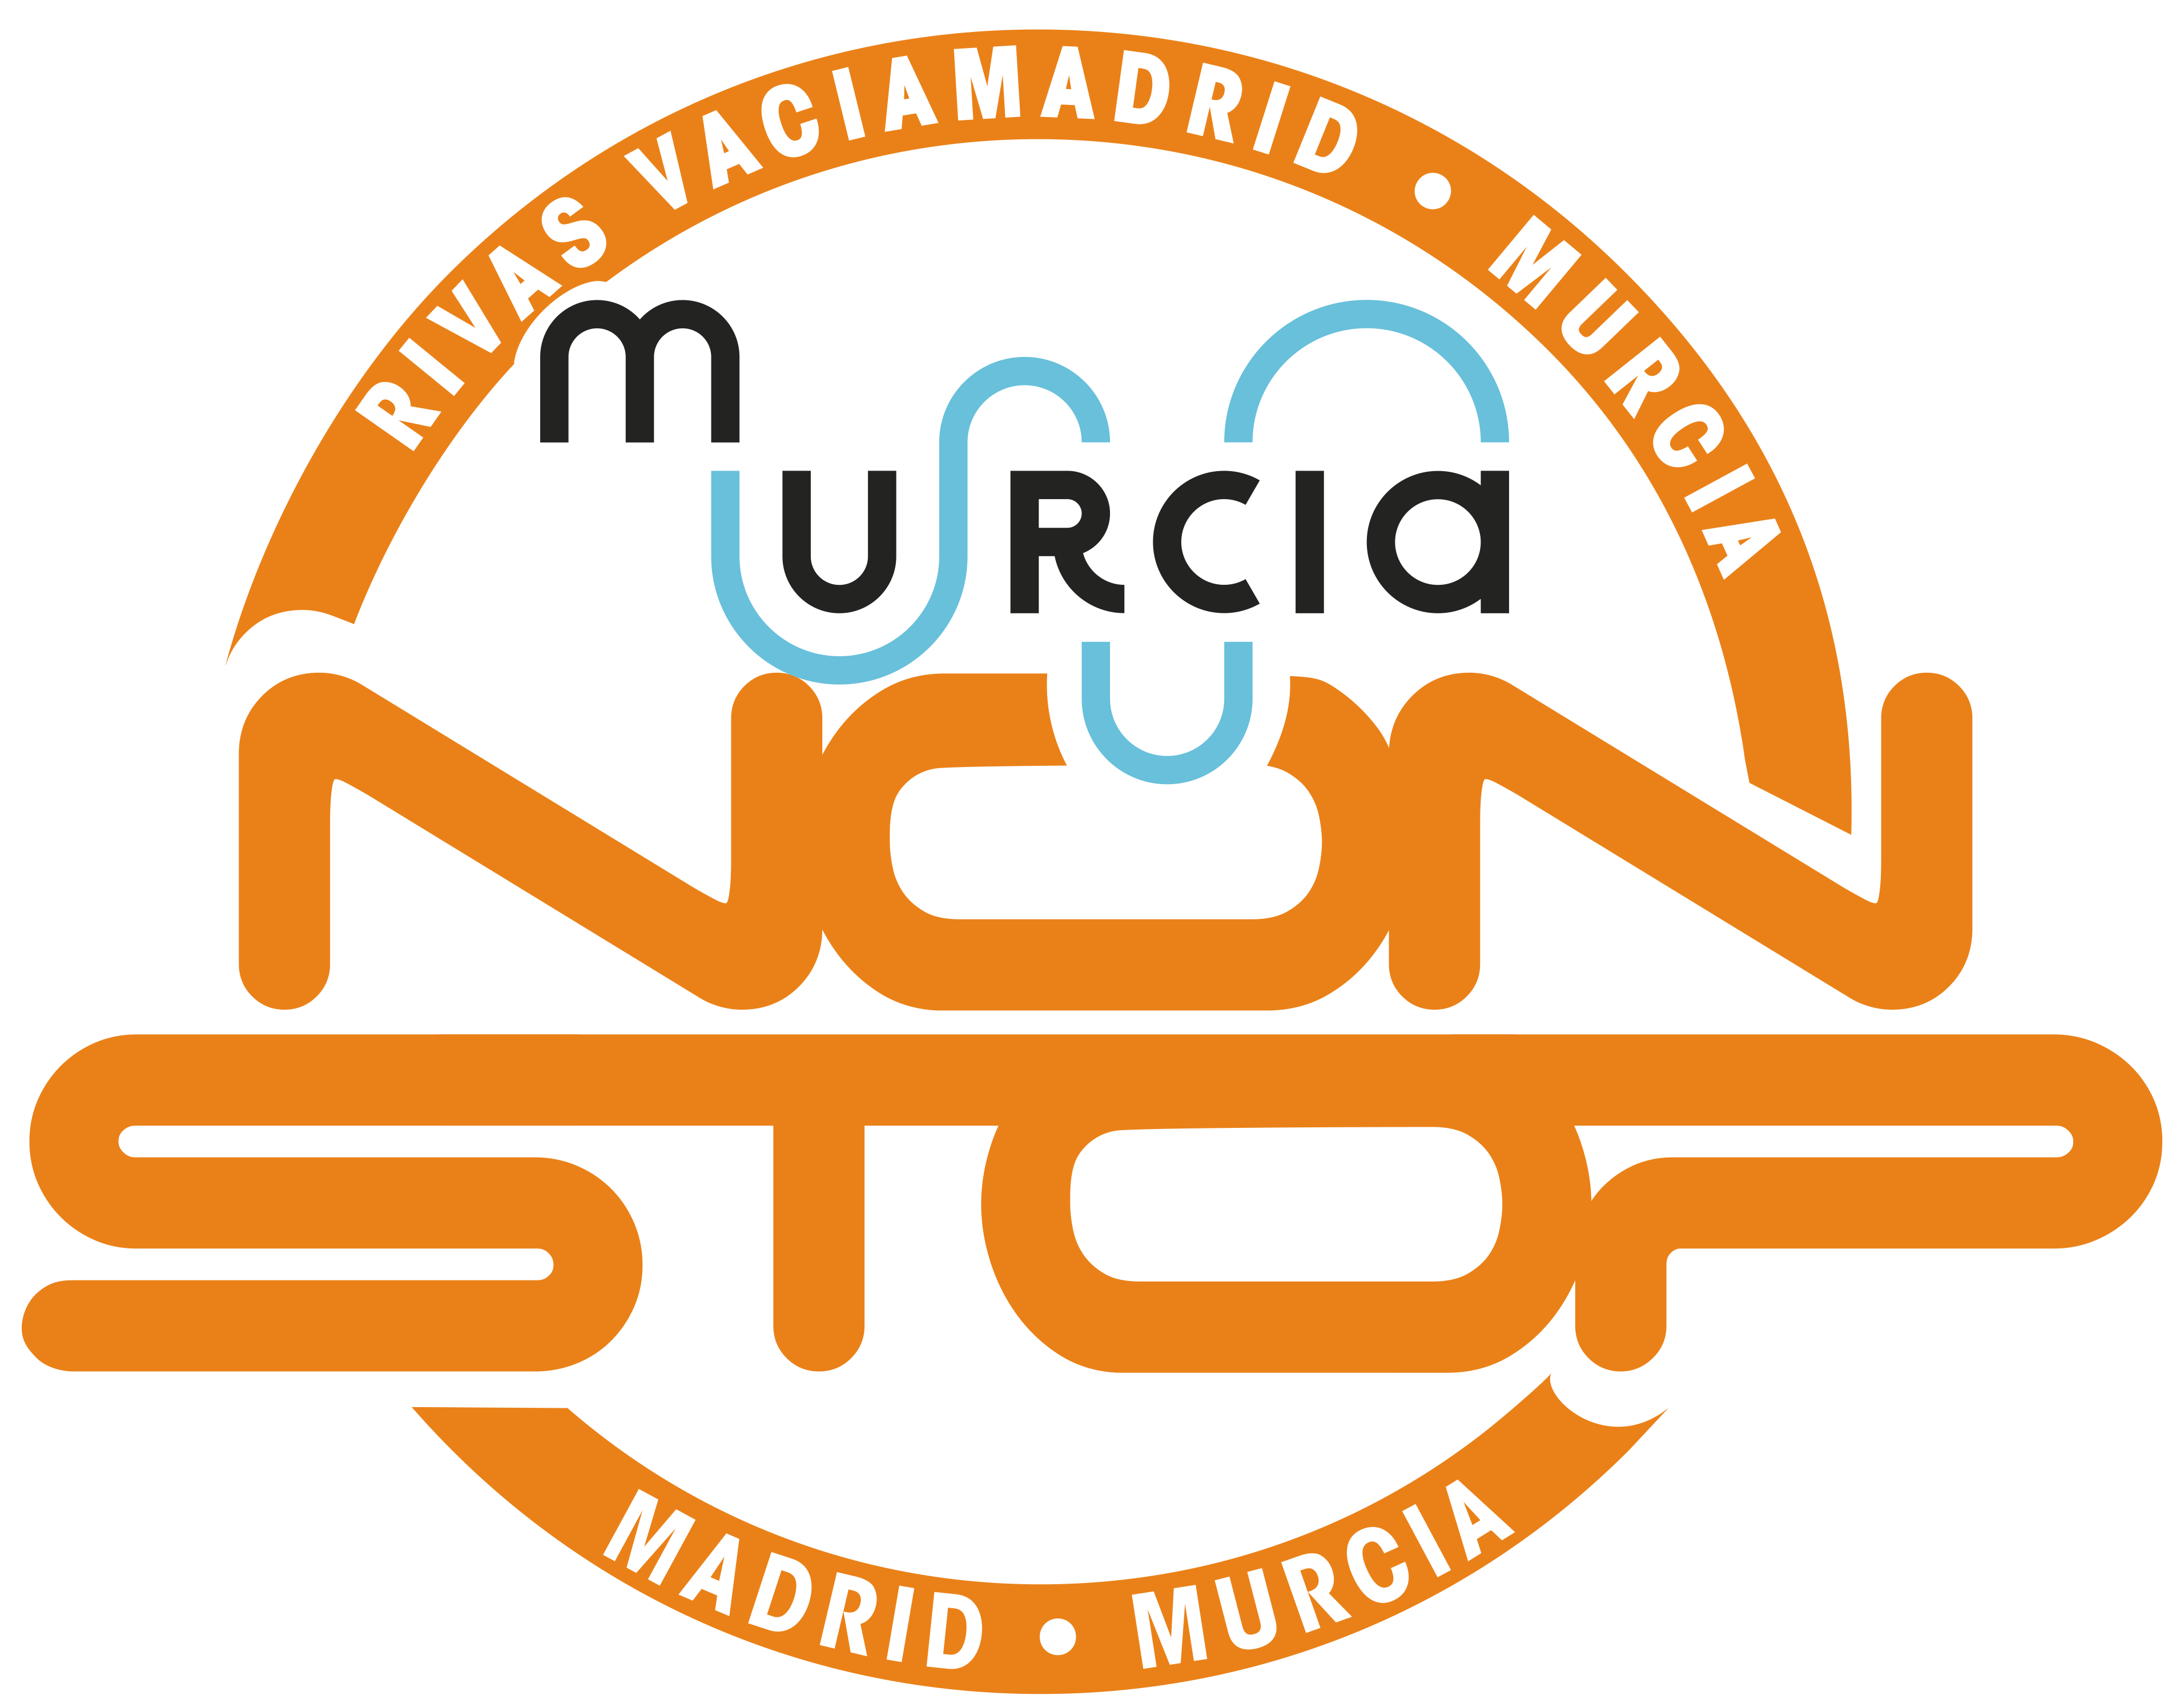 Murcia Non Stop Madrid-Murcia